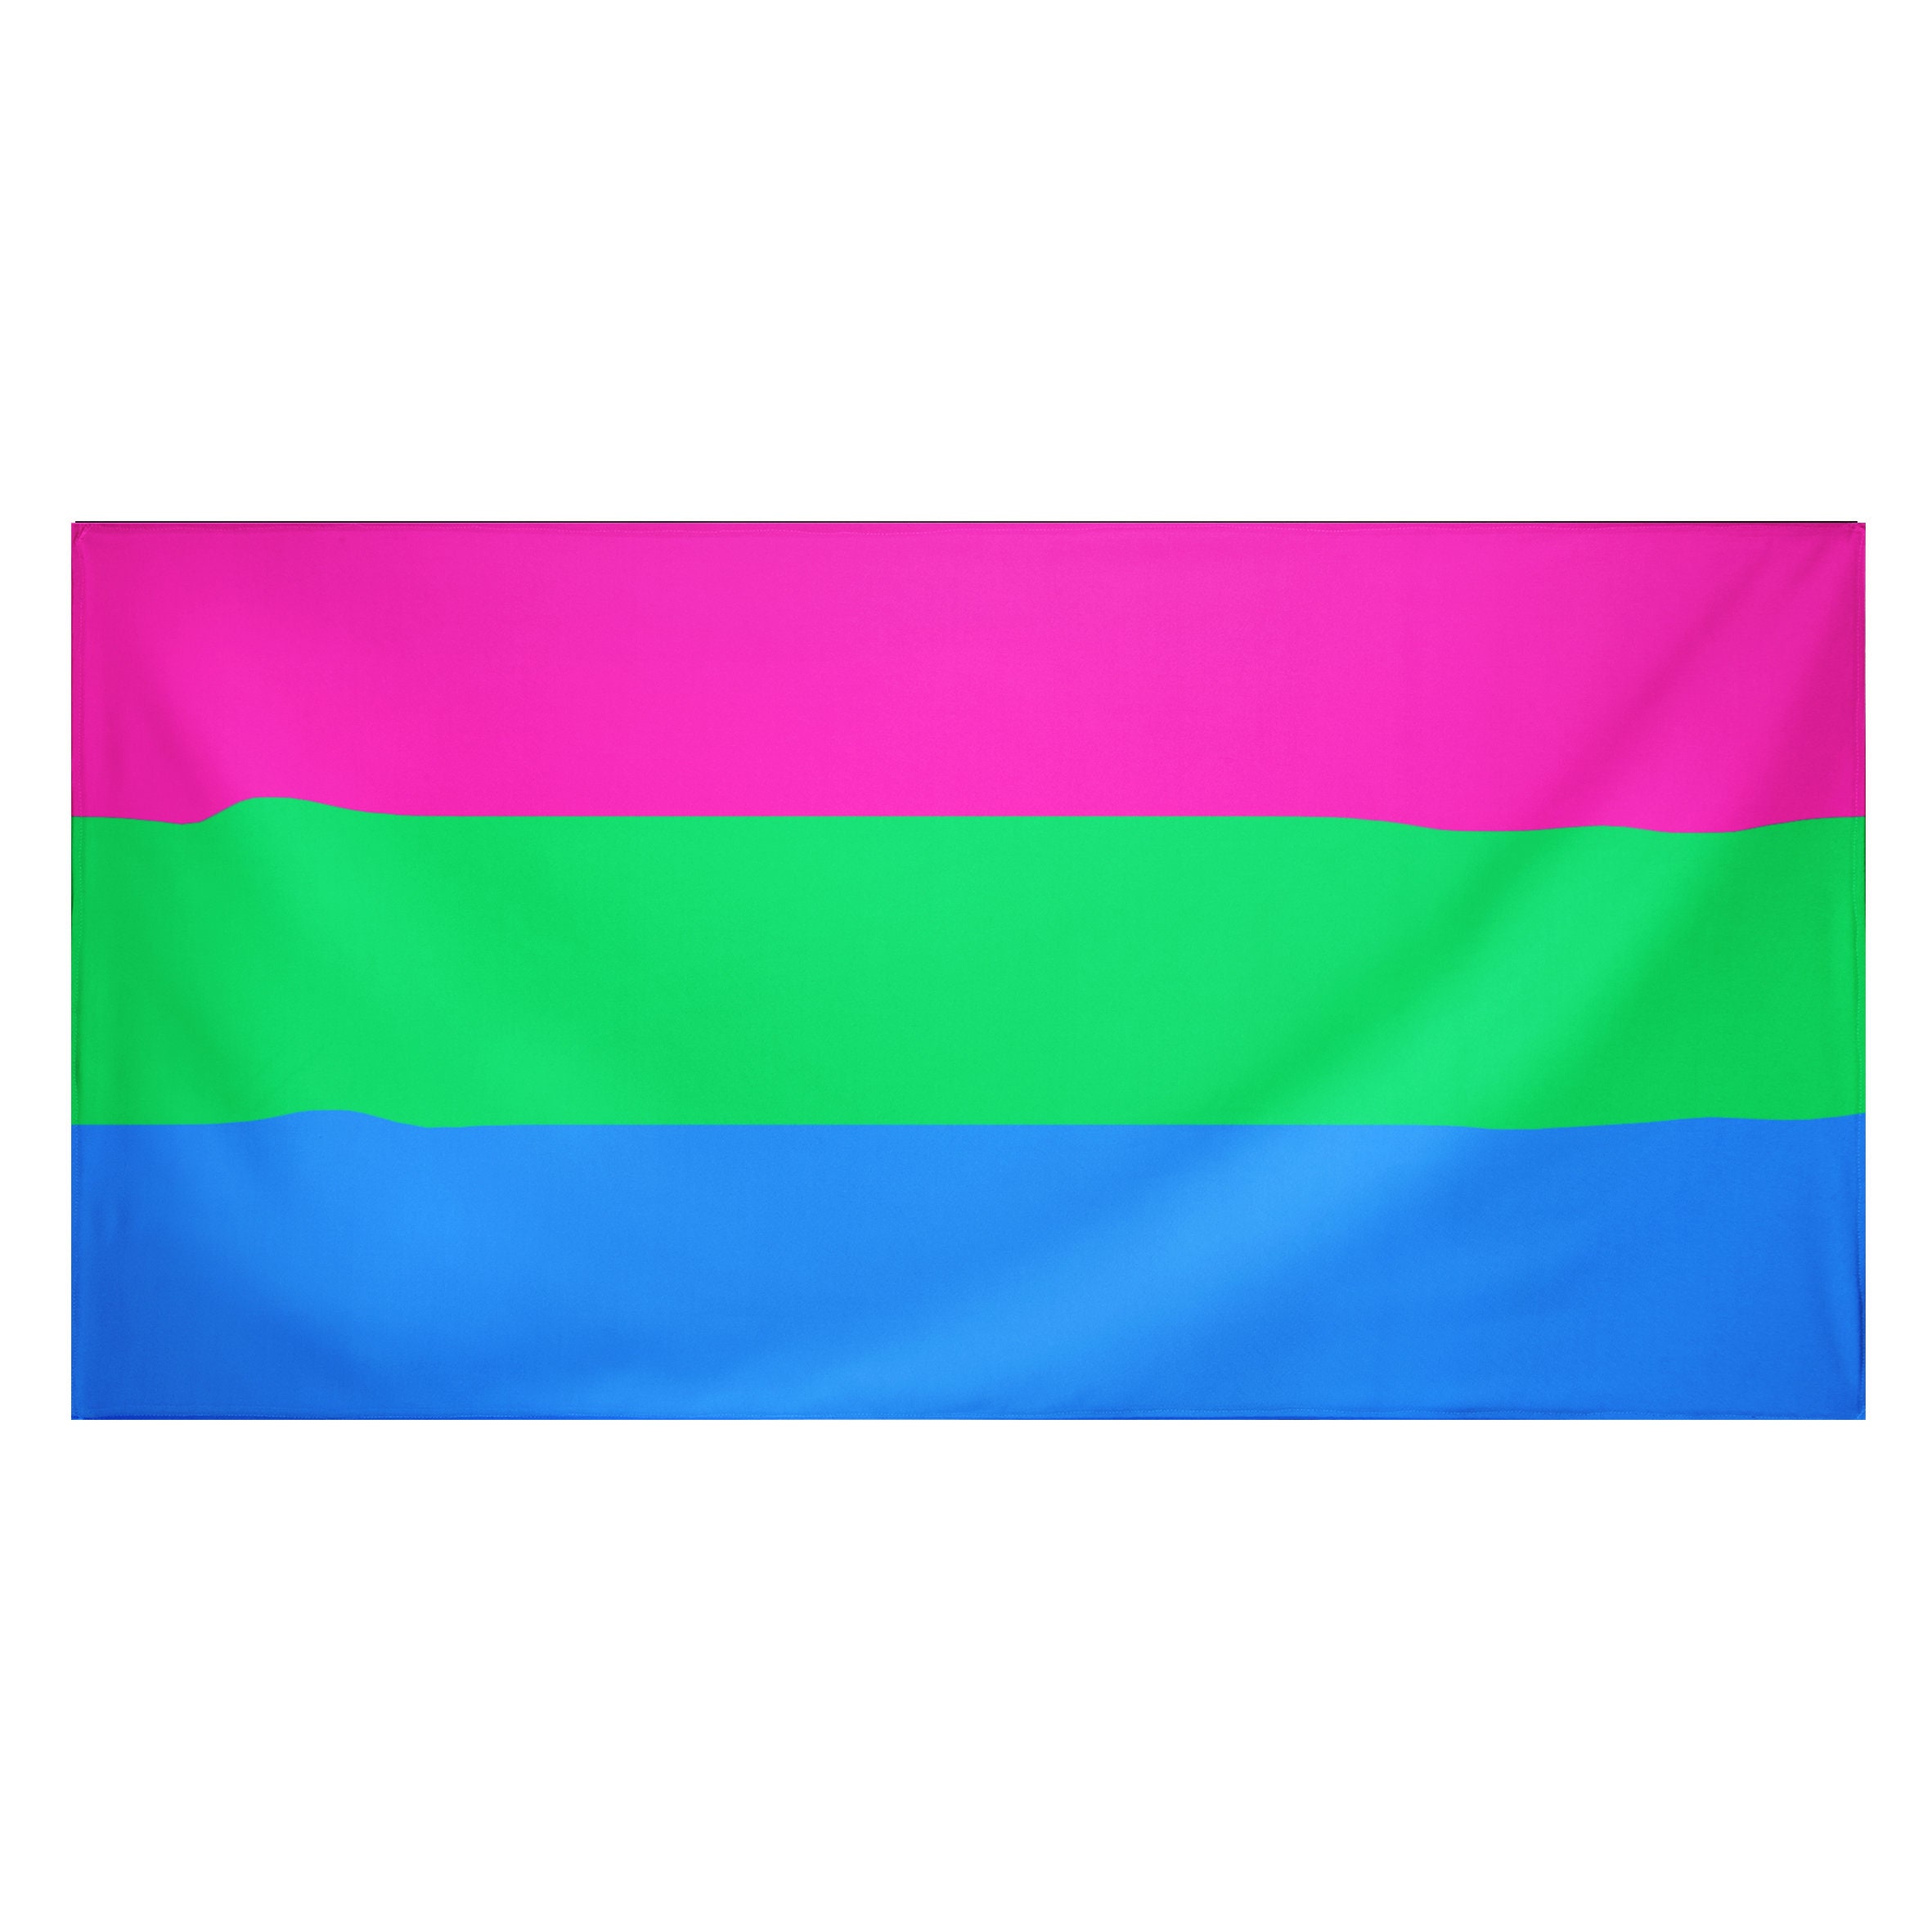 Polysexual flag/flag 150 cm x 90 cm